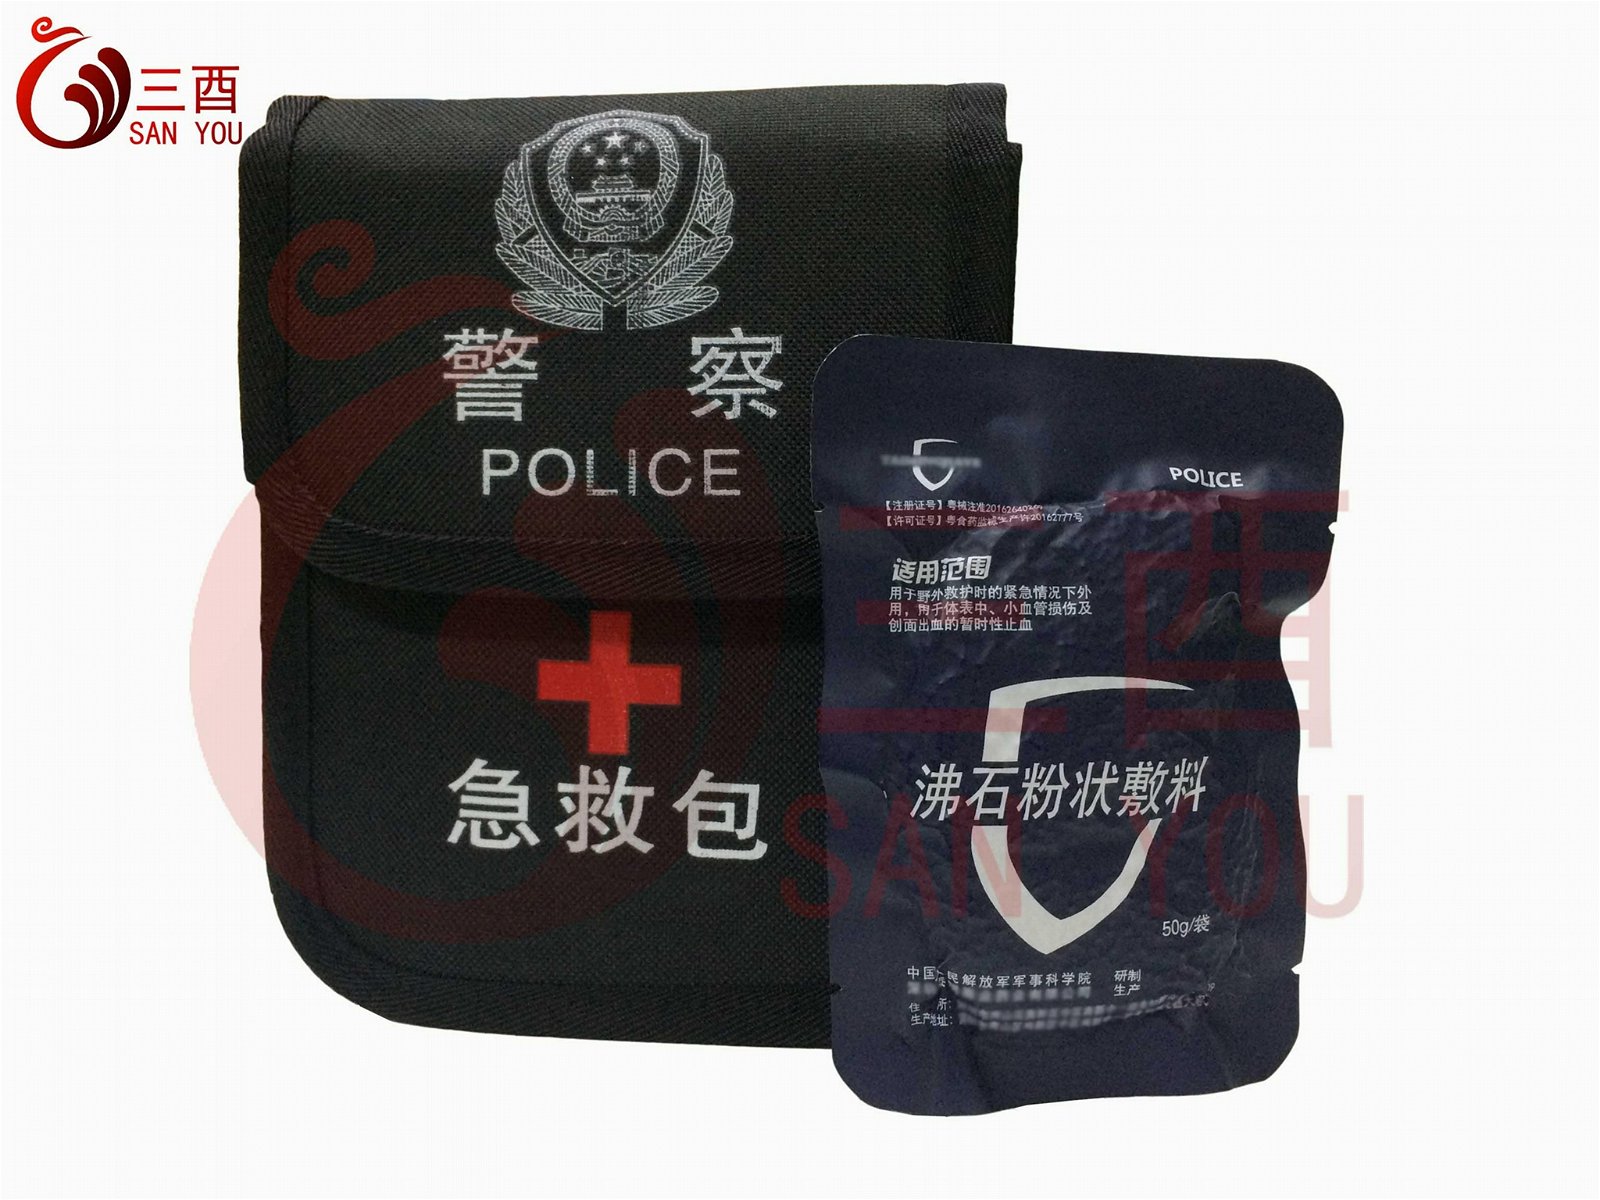 Police First Aid Kit (Arterial Hemostatic) 3